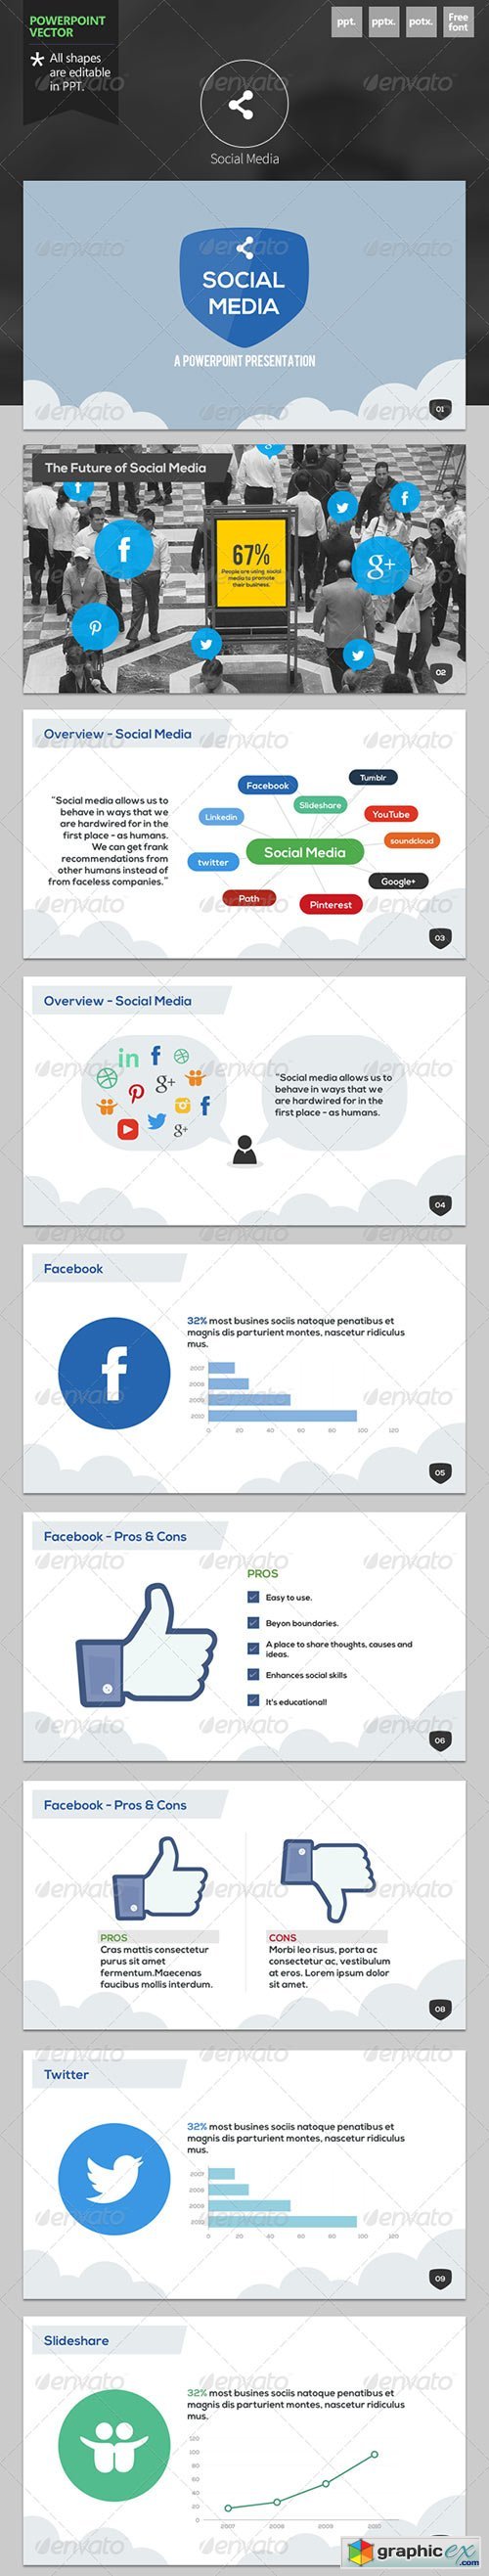 Social Media - Powerpoint Template